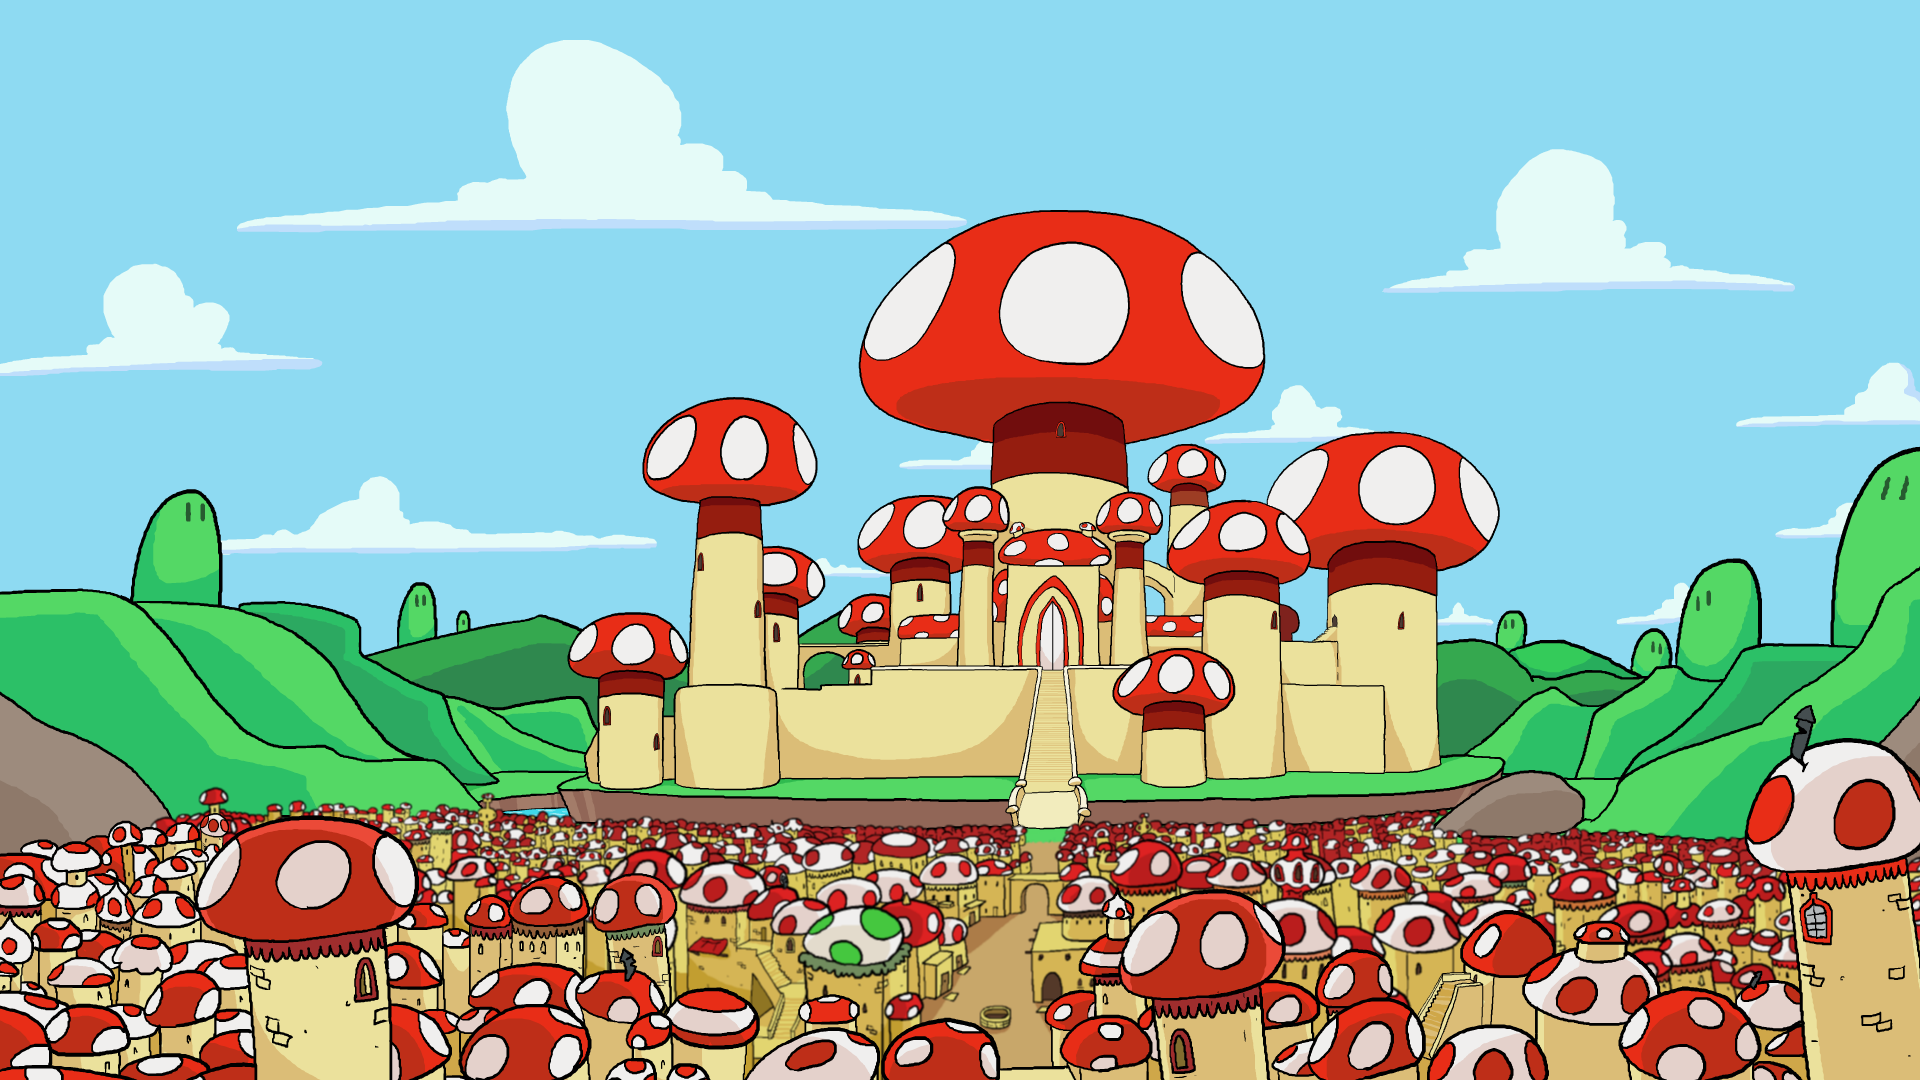 The Mushroom Kingdom Theme For Space Following Meeting